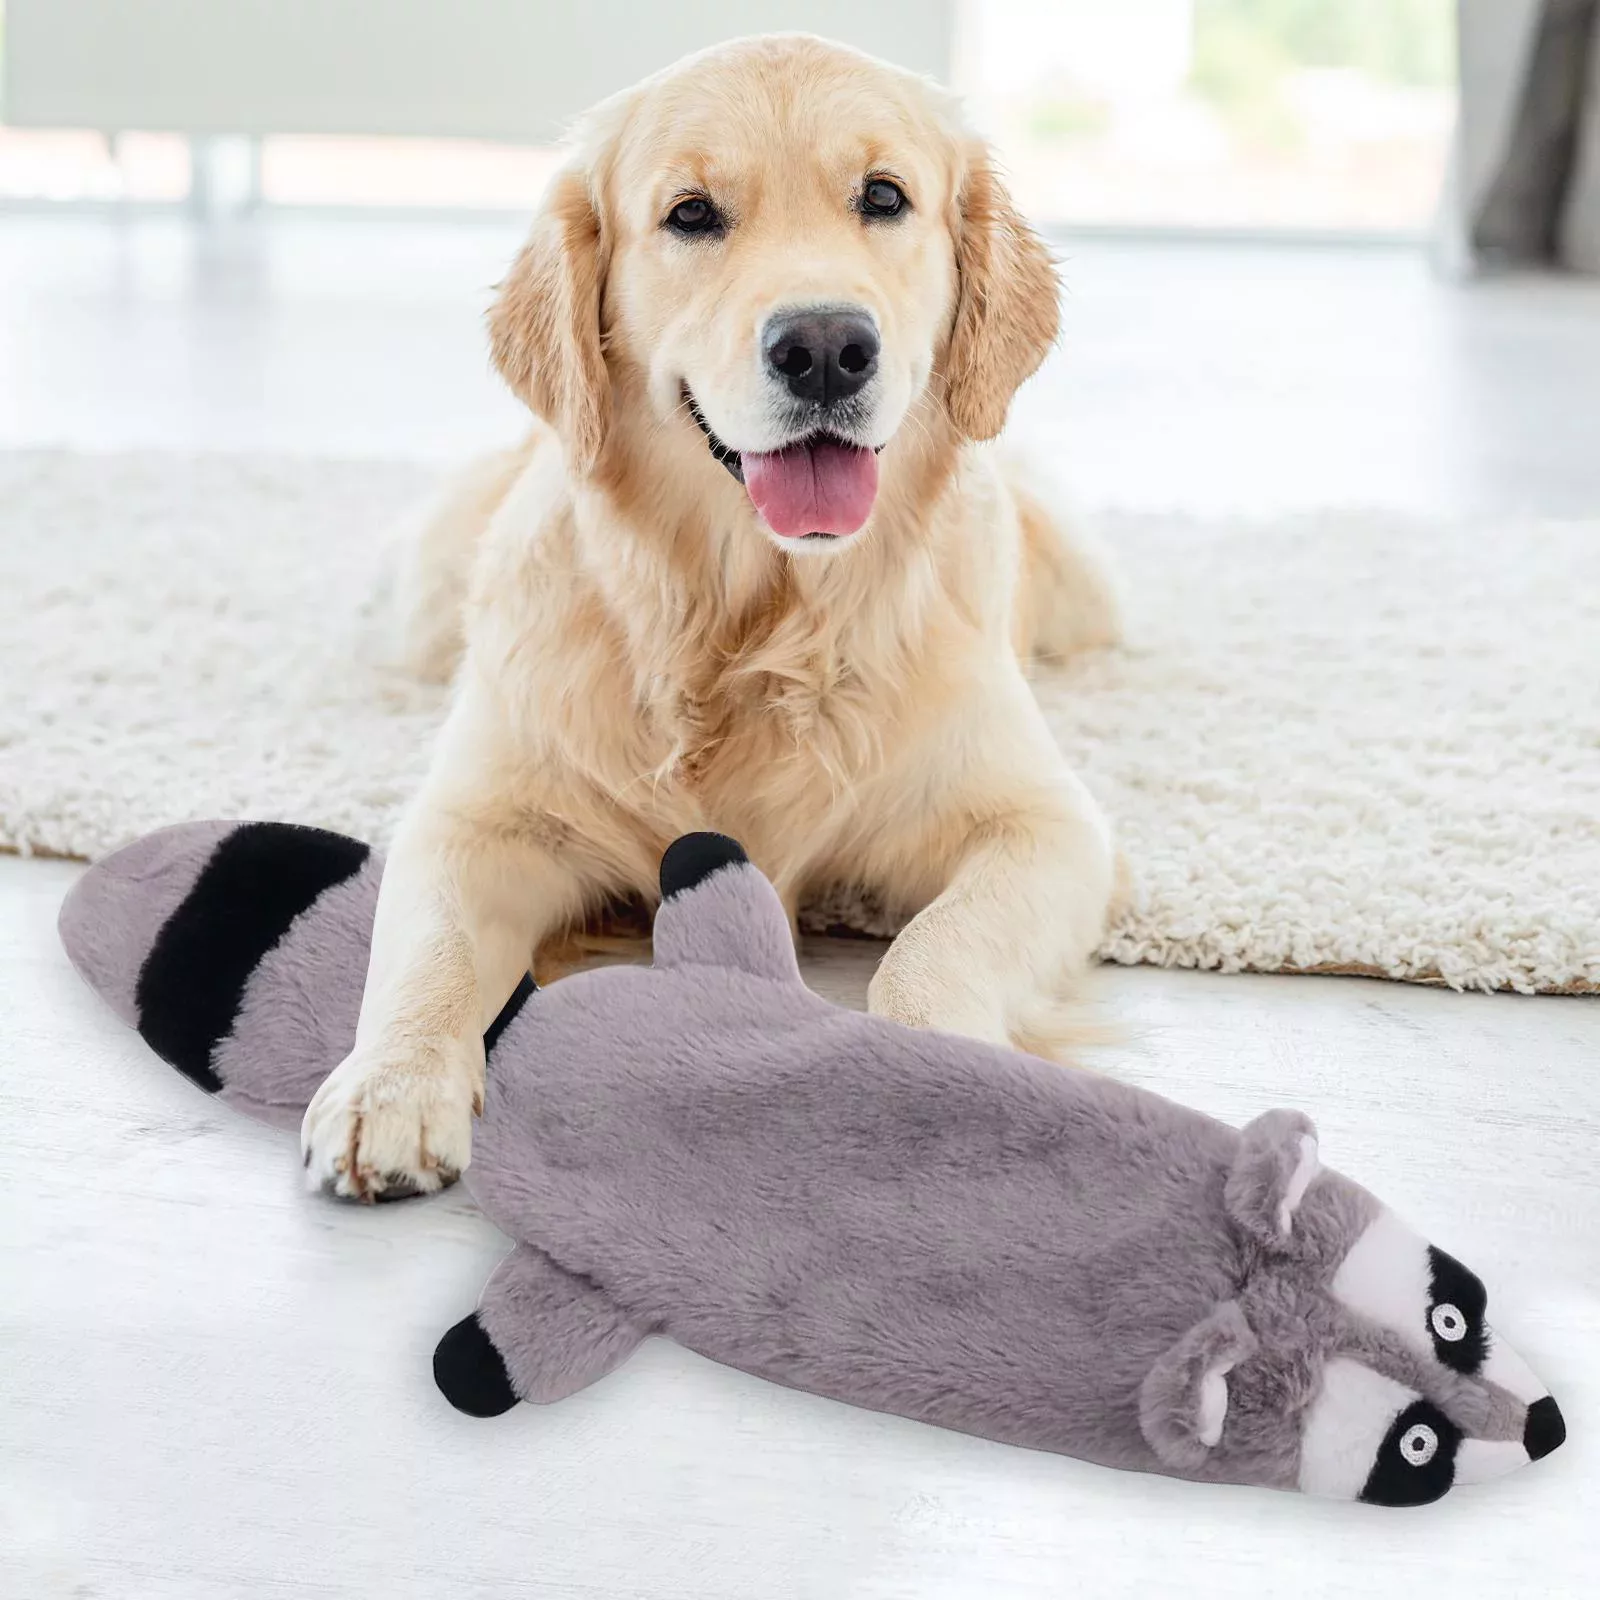 dog toys, dog chewing toy, dog squeaky toy, dog animal toy